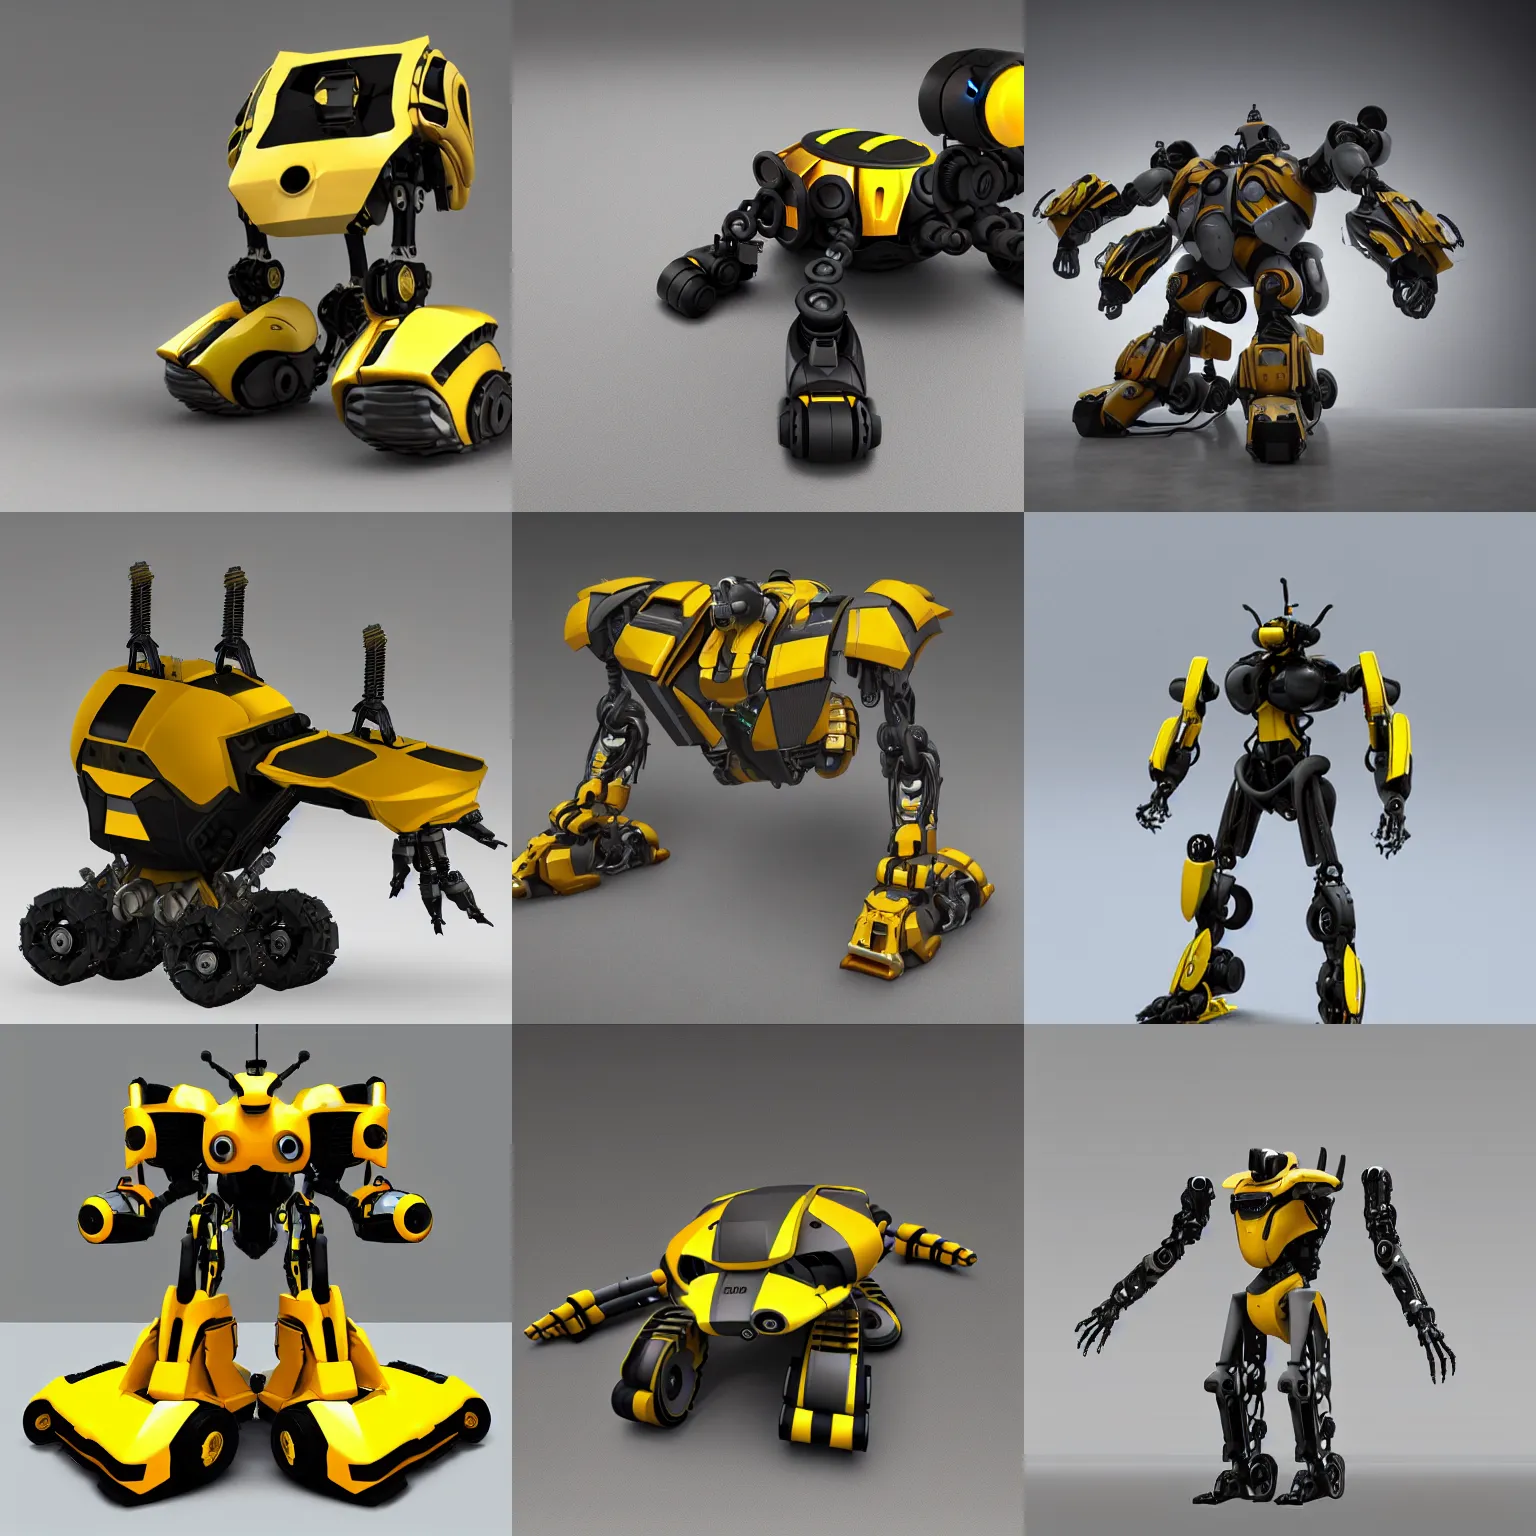 Prompt: hard surface, robotic platform, based on bumblebee, 6 legs